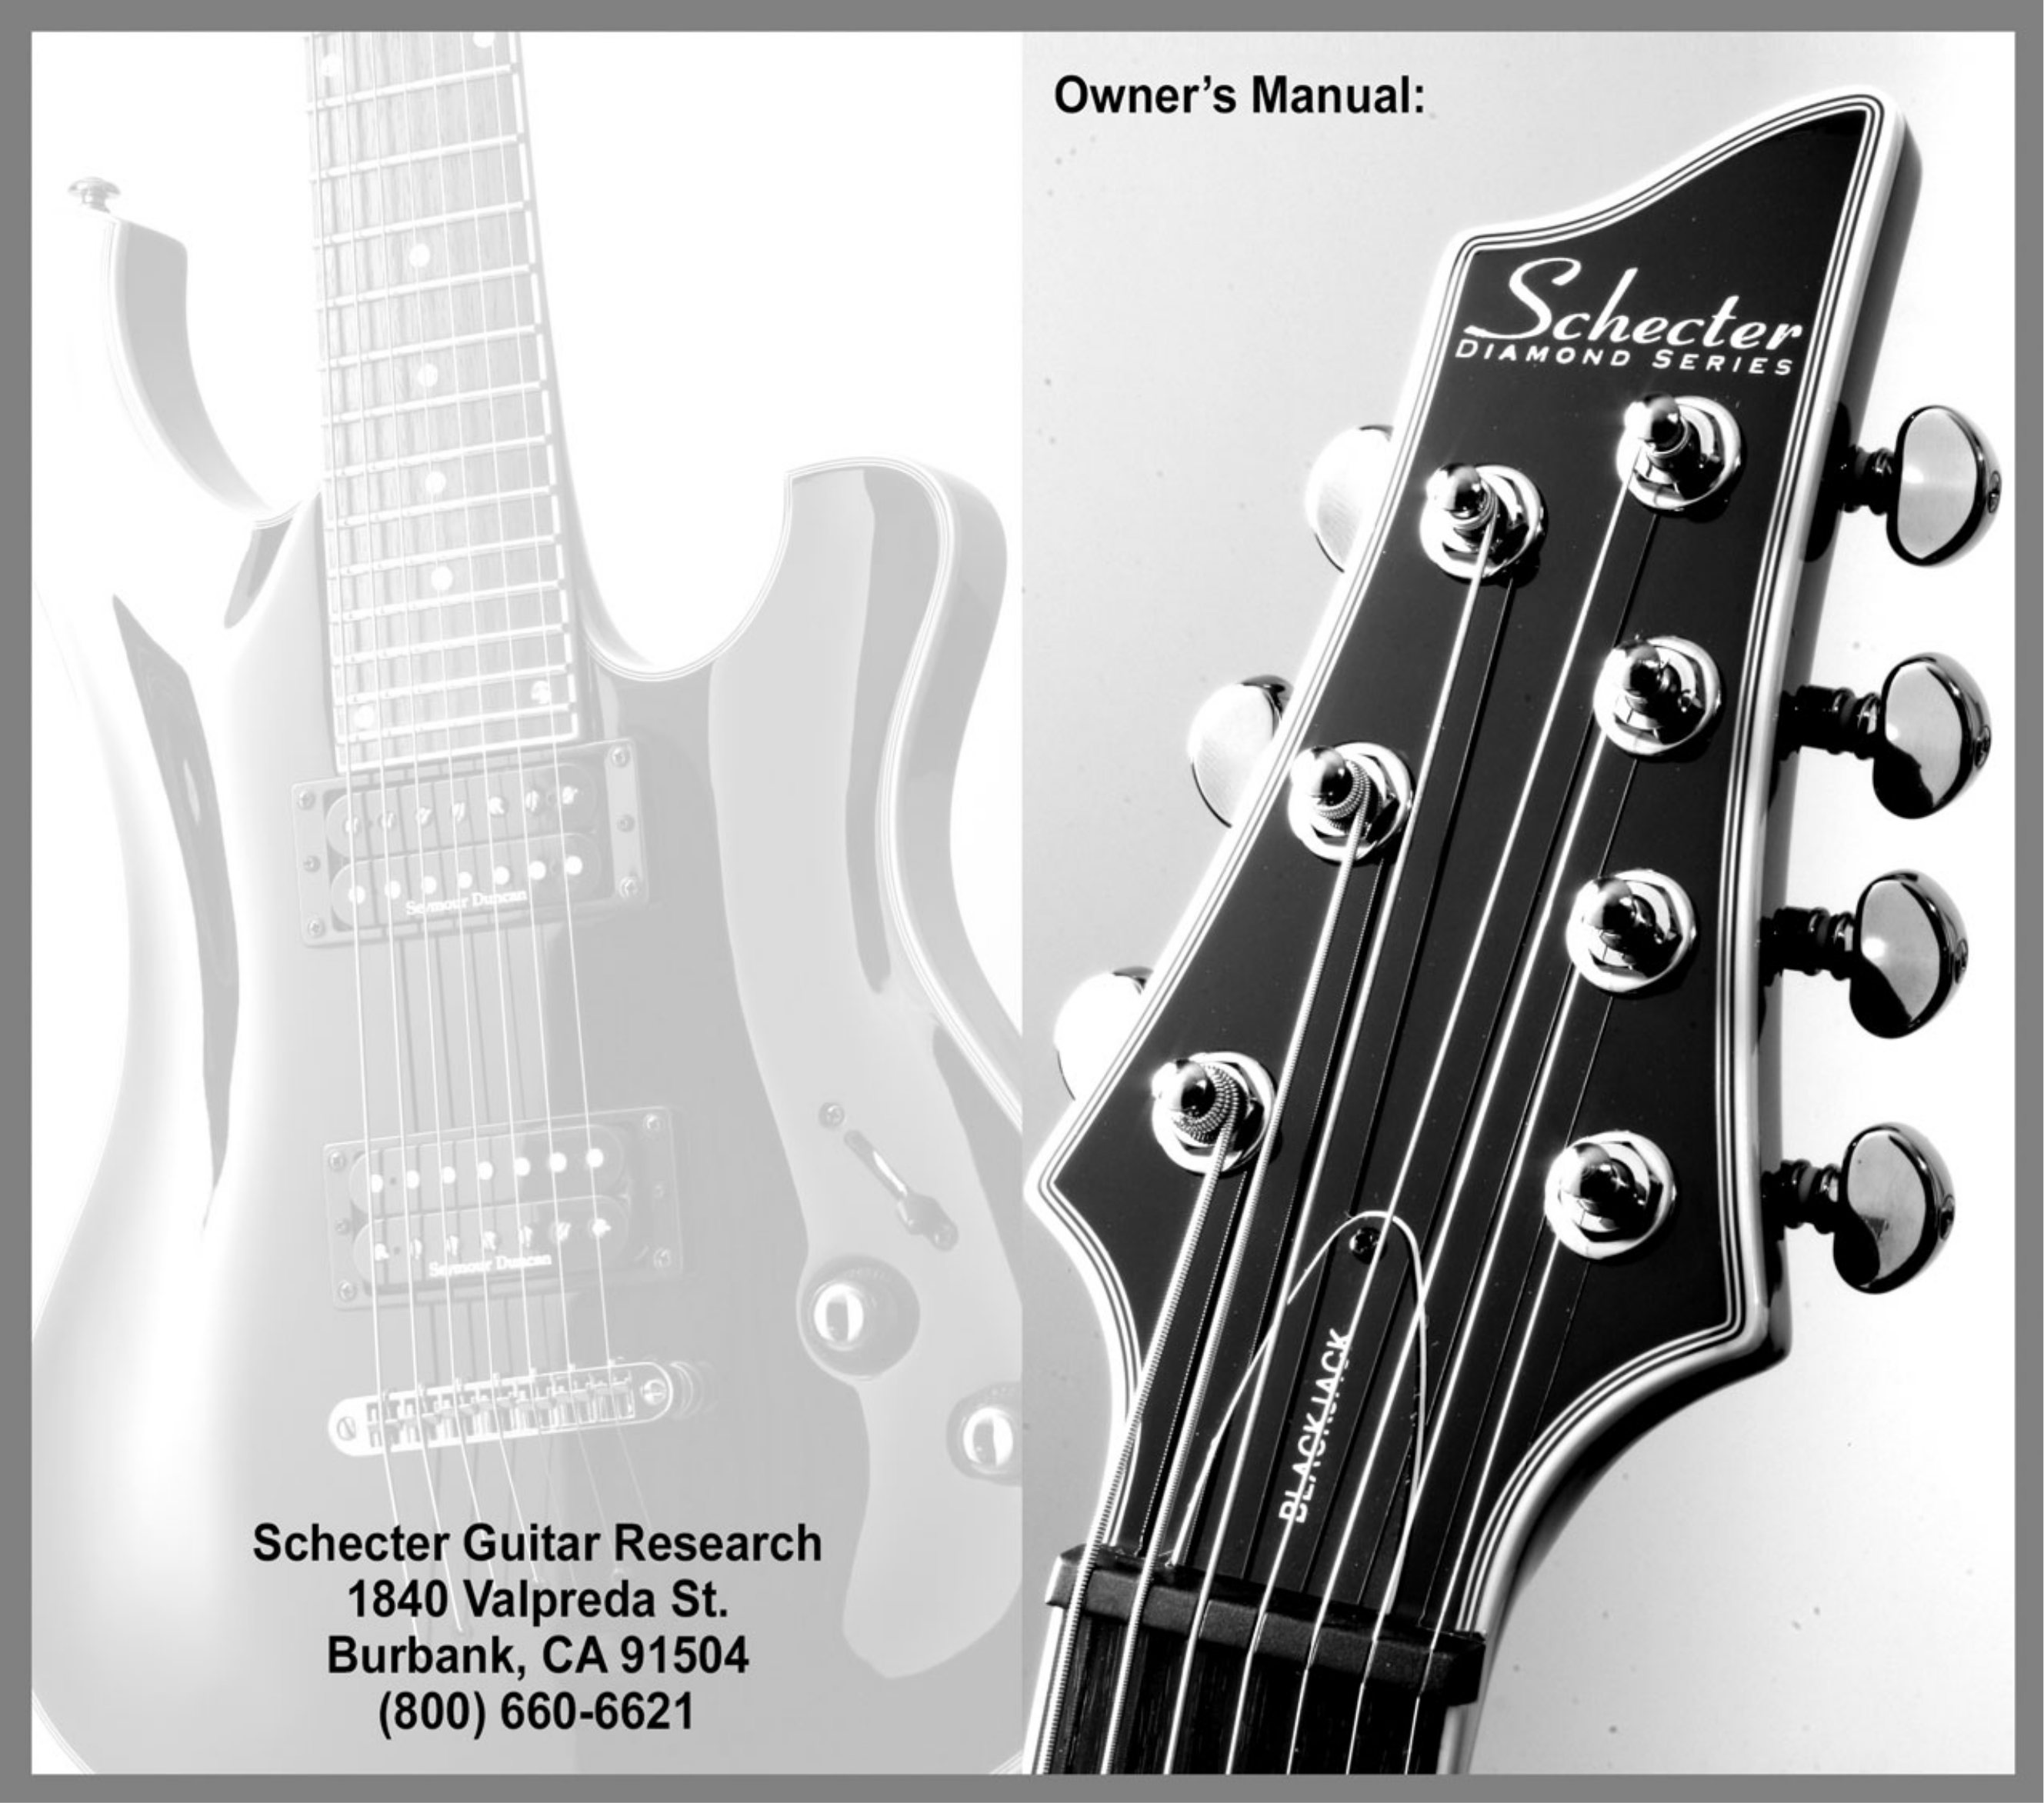 Download free pdf for Schecter Damien 6 FR Guitar manual schecter guitars diamond series wiring diagram 